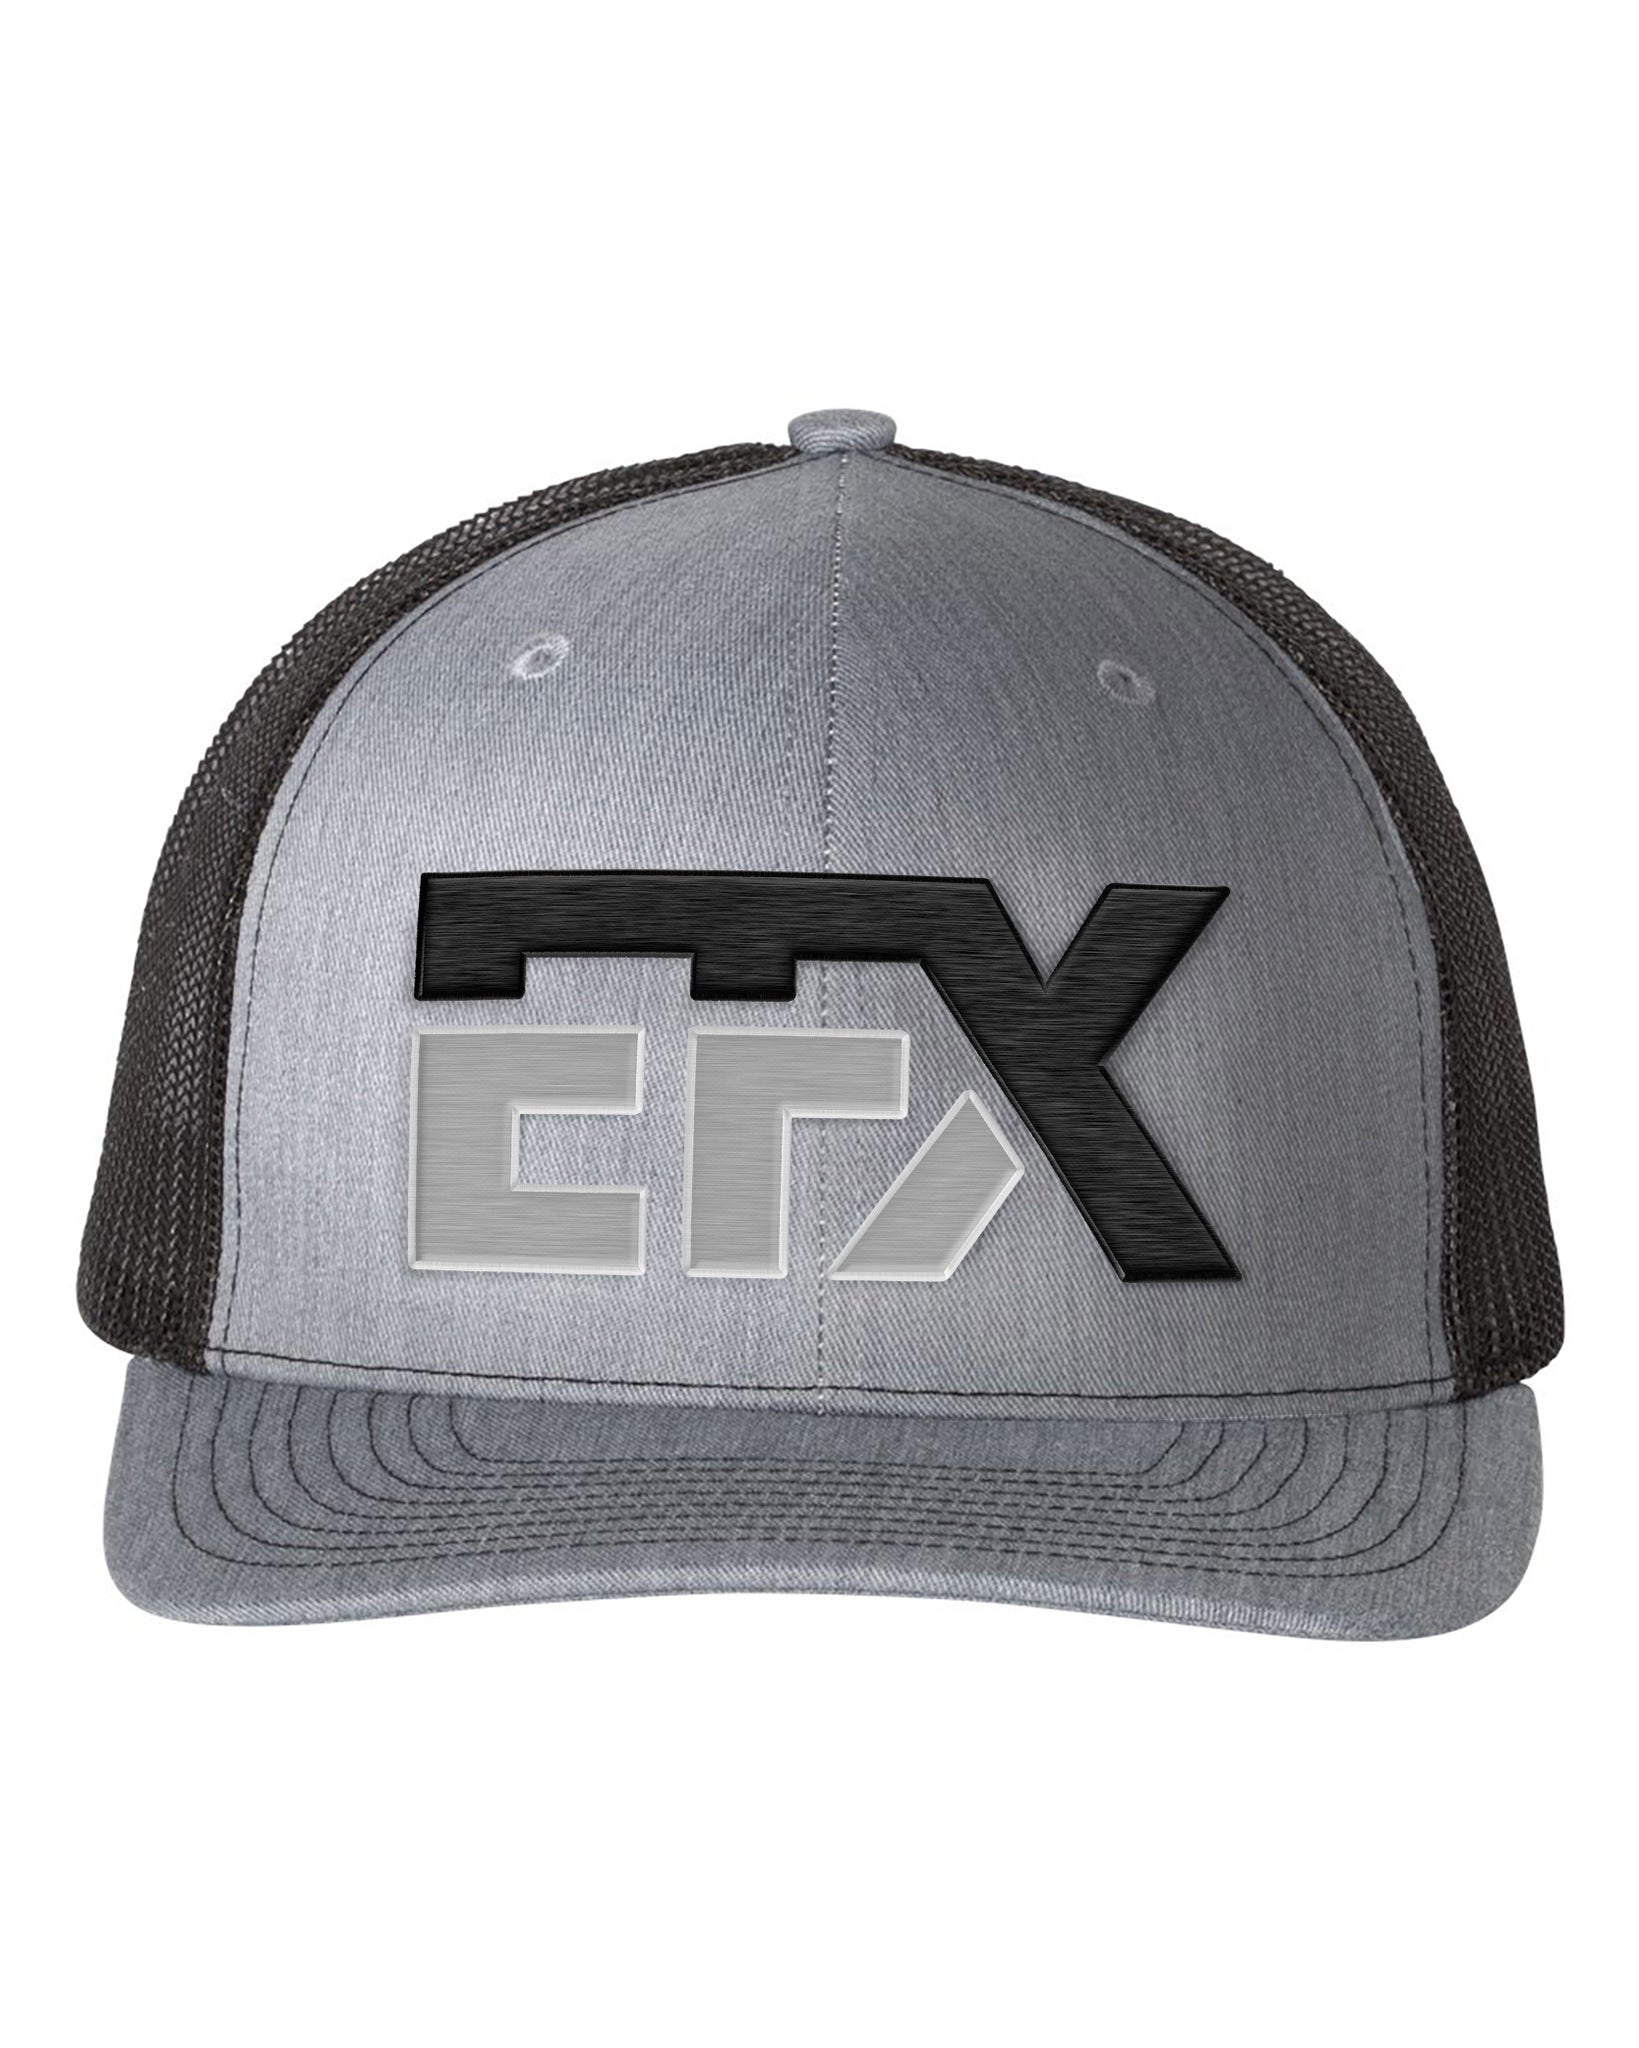 Logo-Short-Black & Gray on Black & Gray Hat